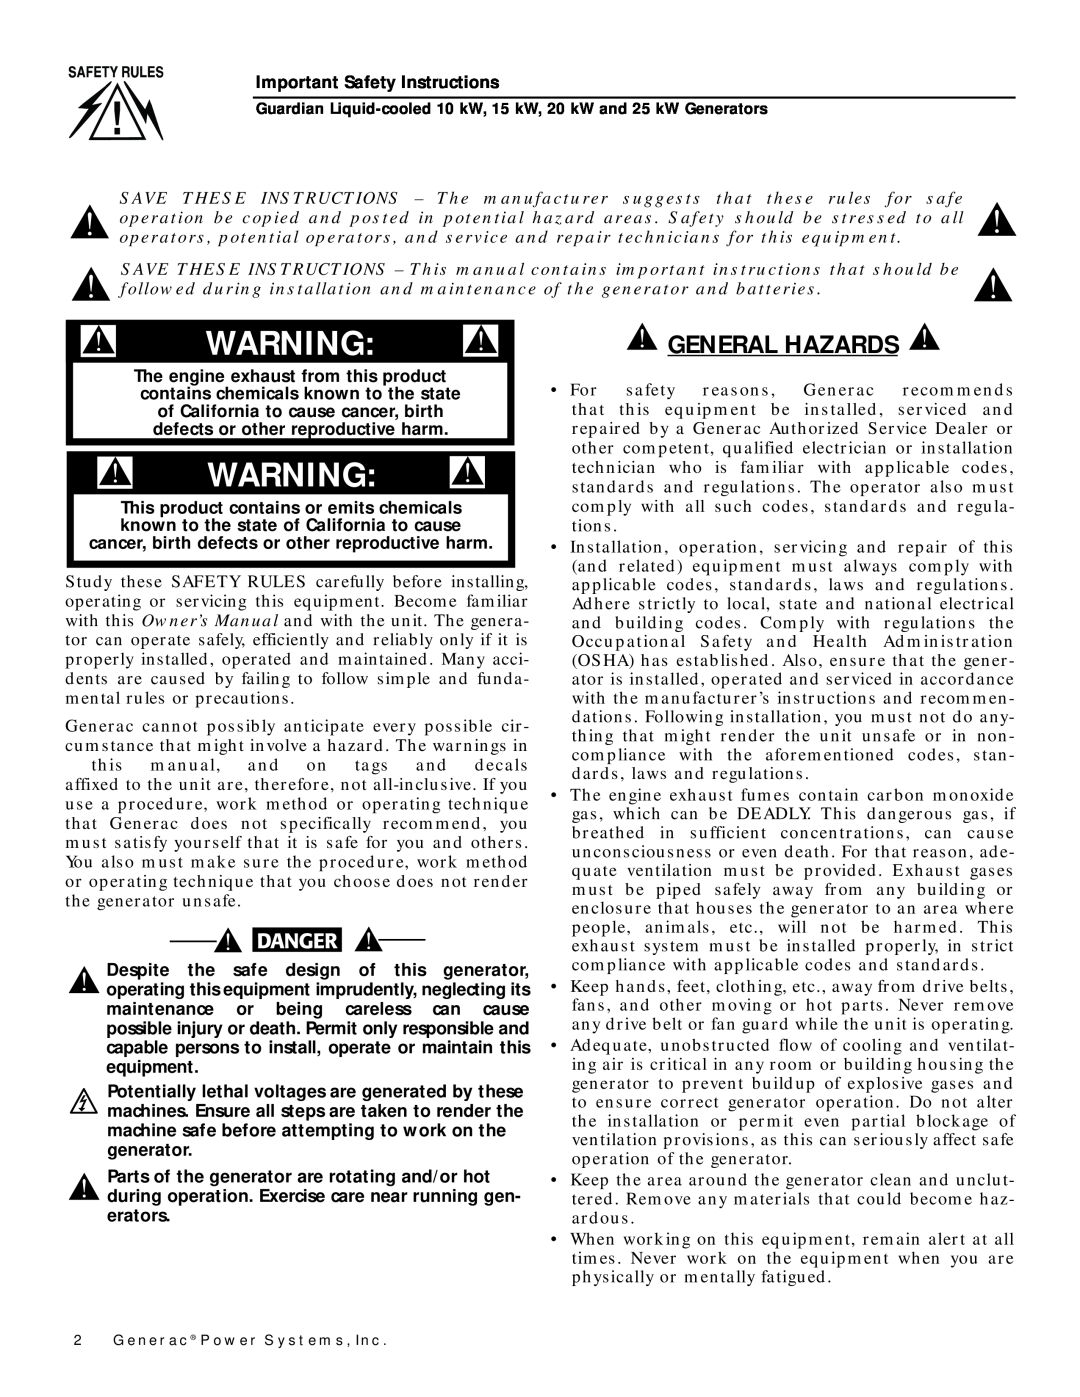 Generac Power Systems owner manual General Hazards 